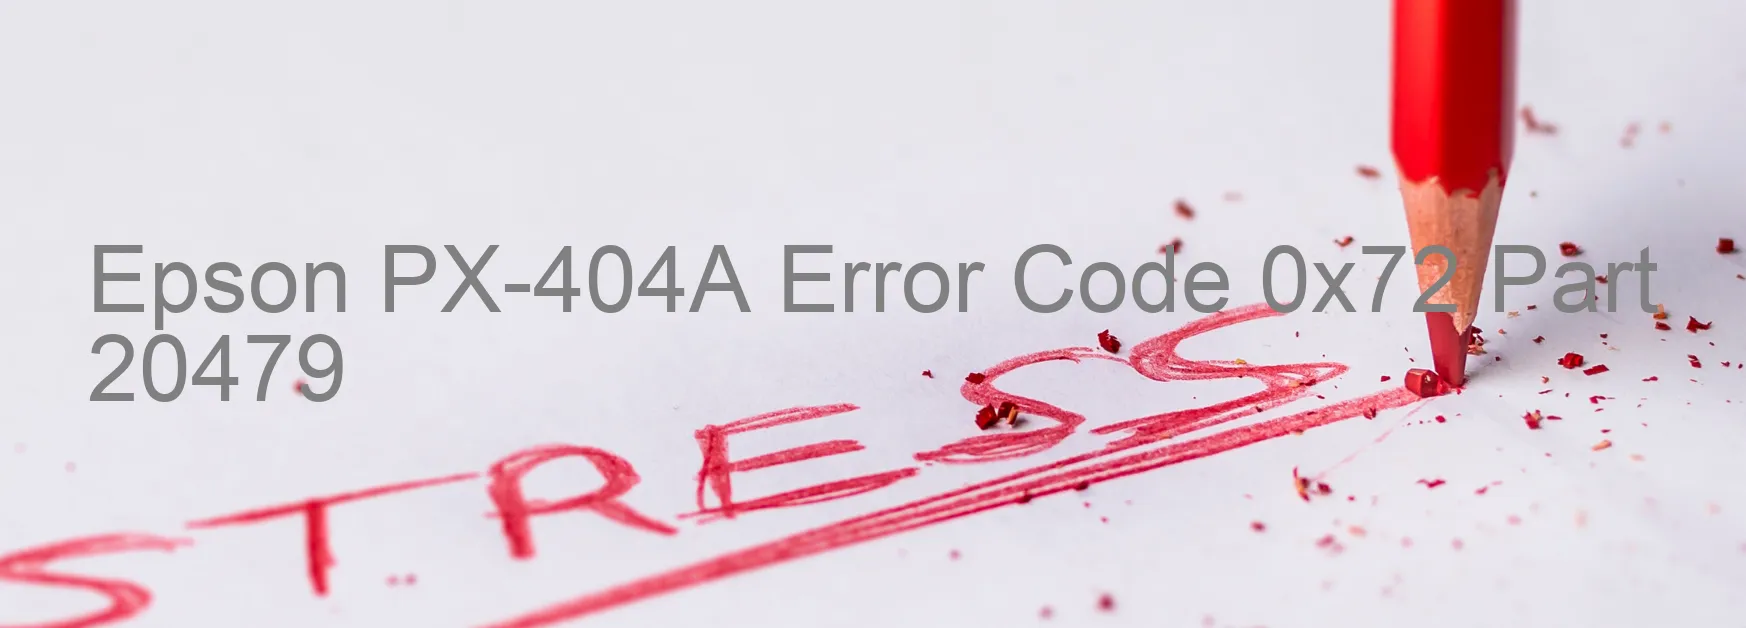 Epson PX-404A Error Code 0x72 Part 20479